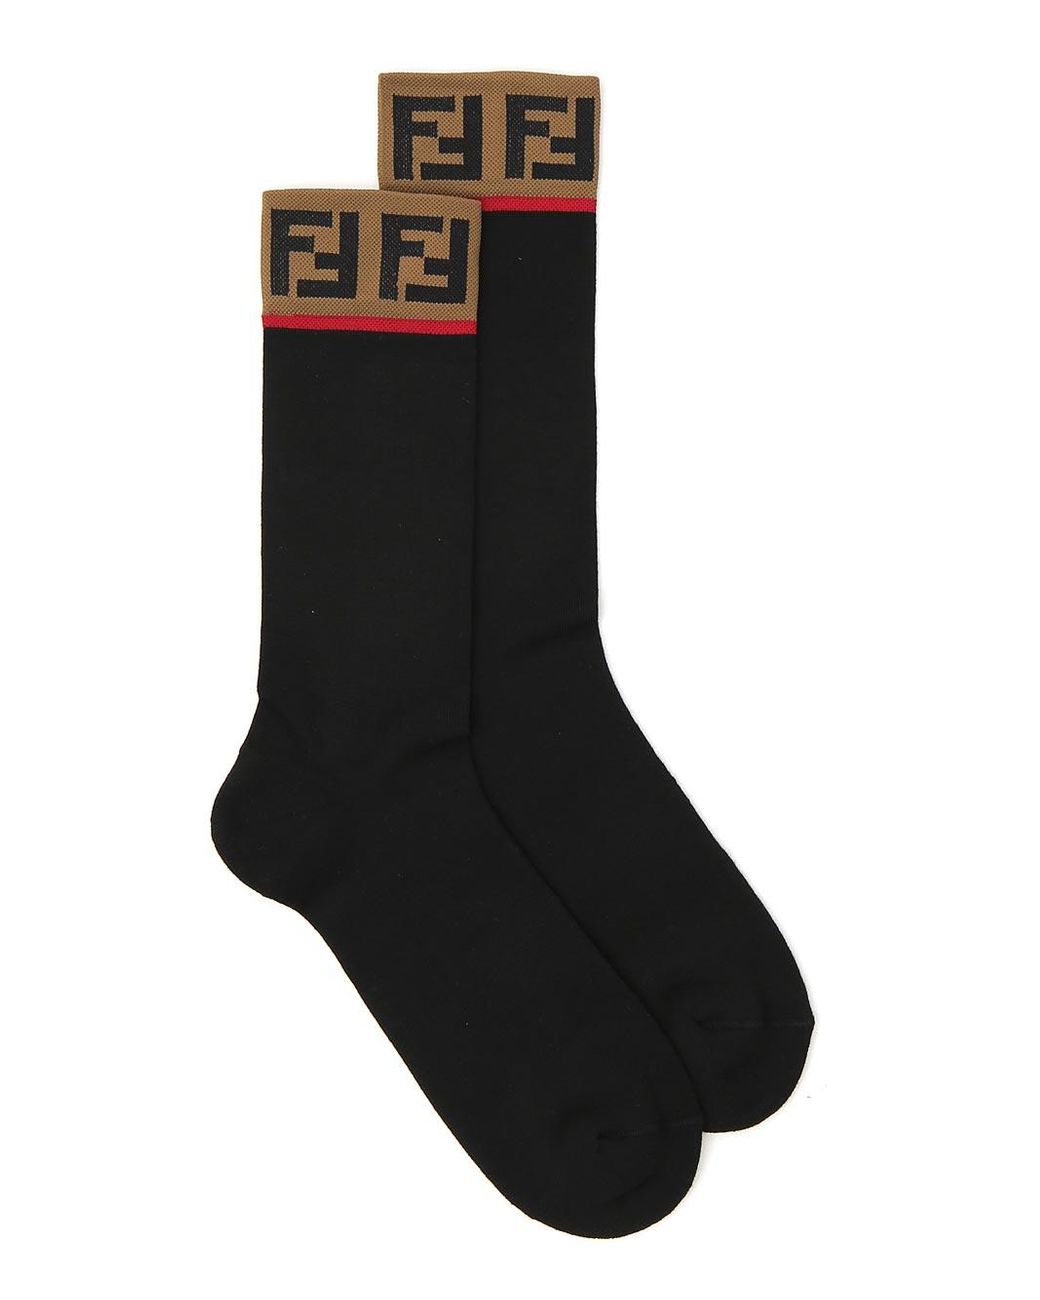 Fendi Cotton Ff Trim Long Socks in Black for Men - Lyst